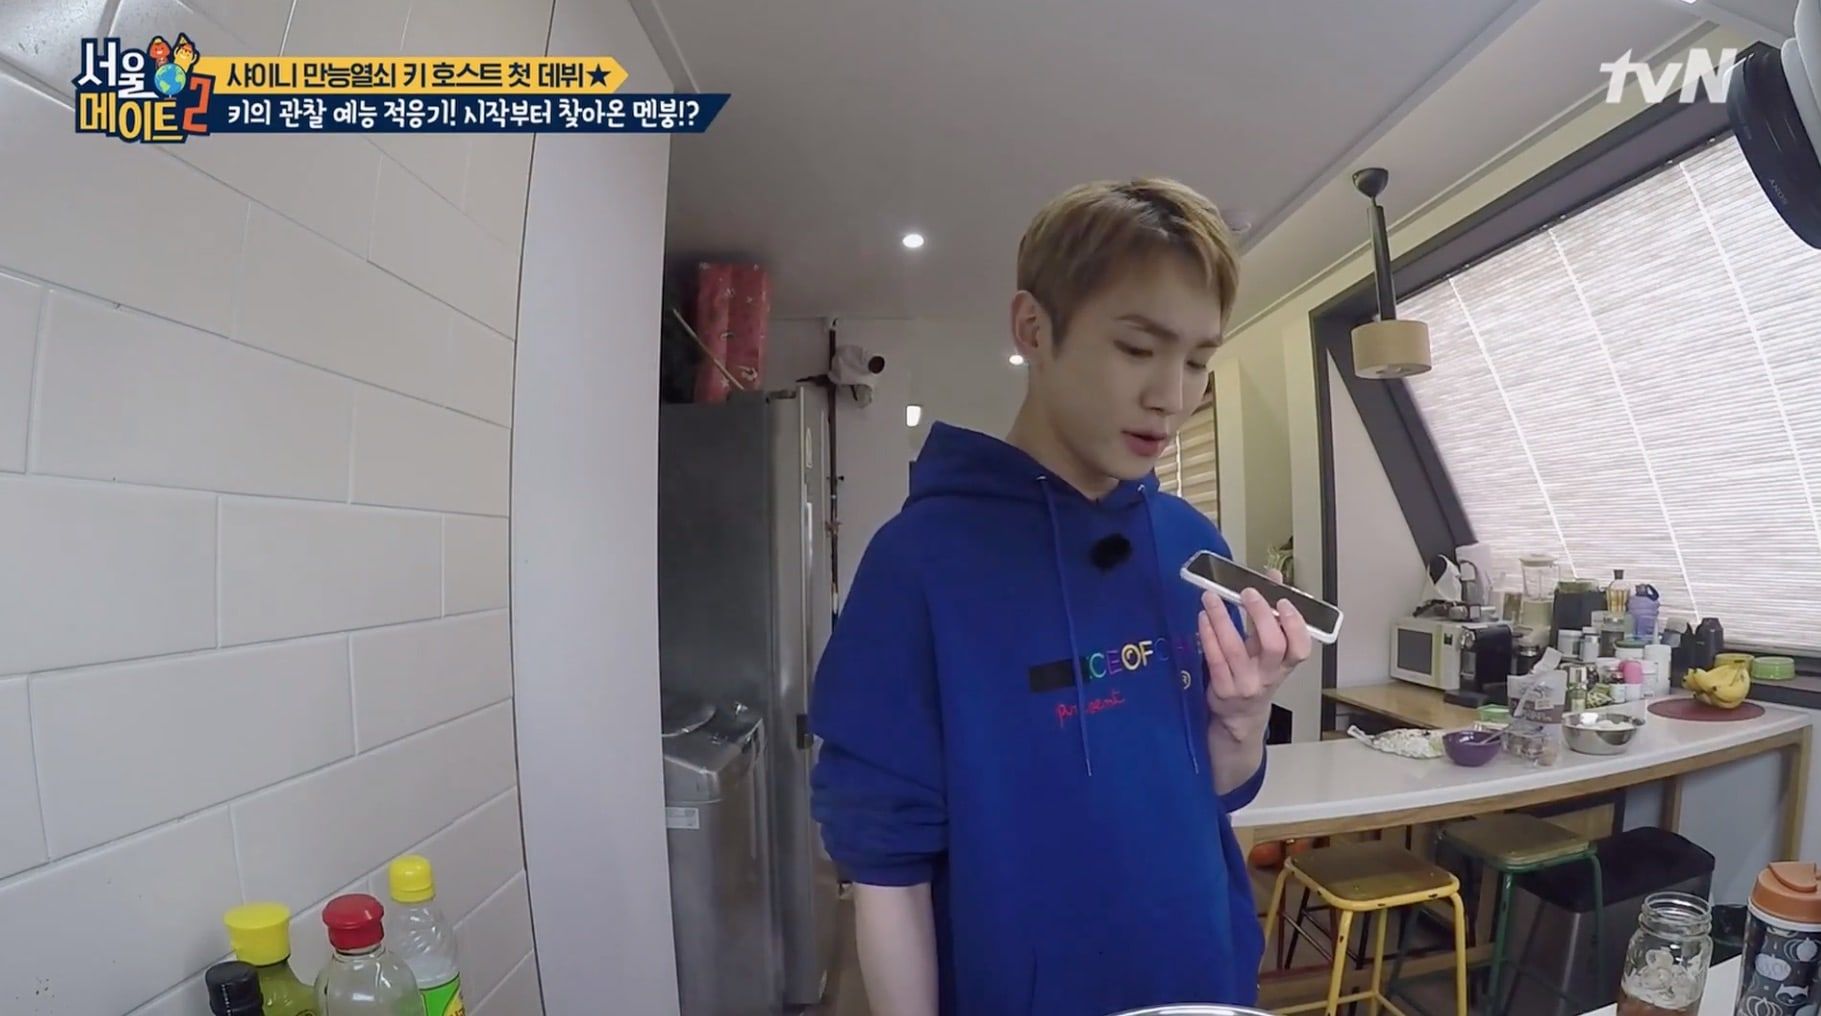 Dapur di rumah Key Shinee